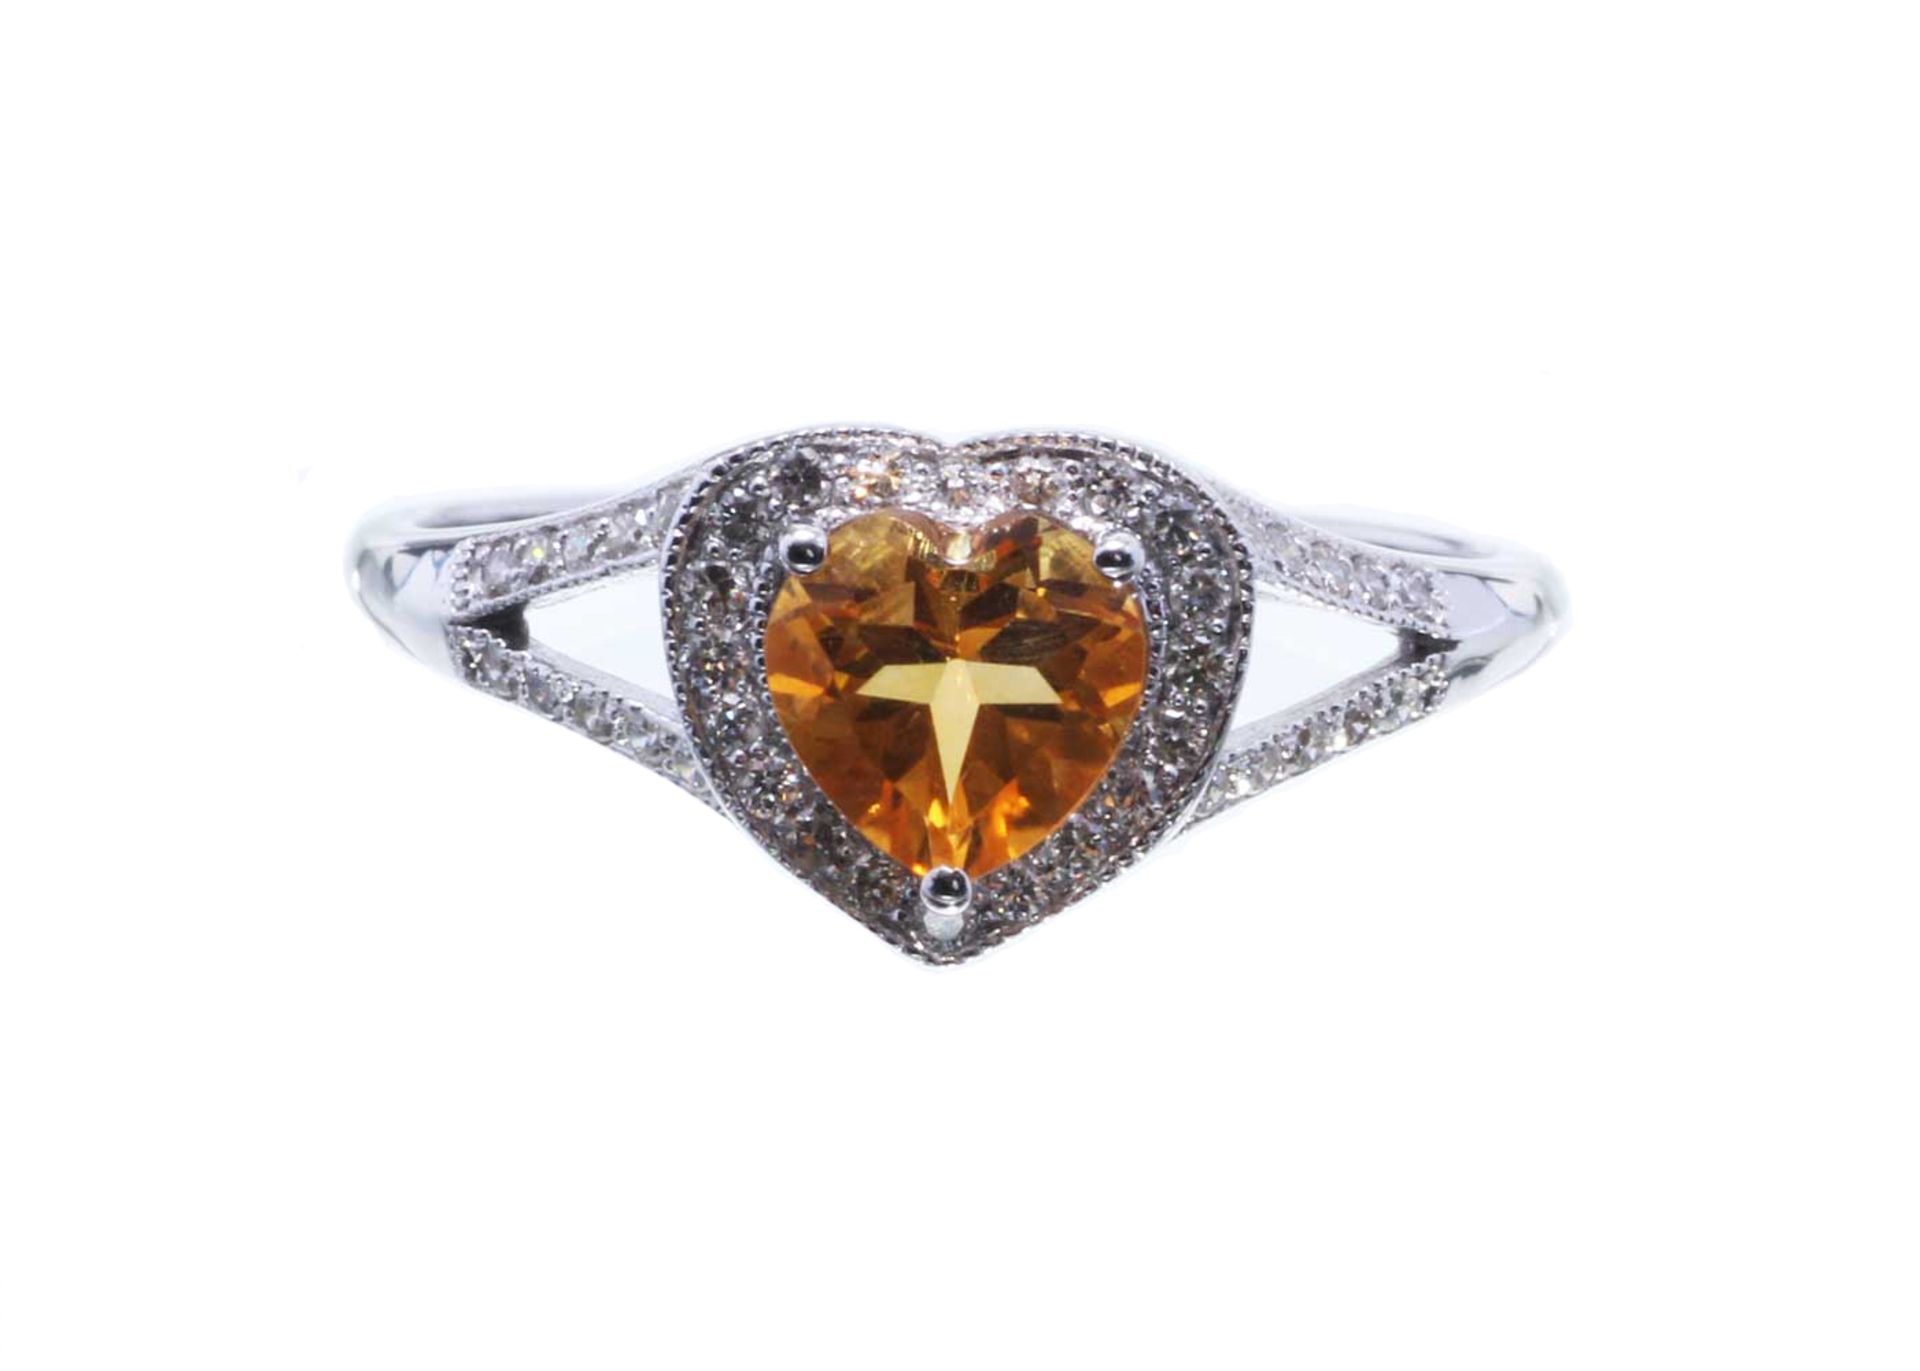 9ct White Gold Heart Shape Citrine Diamond Ring 0.20 Carats - Image 4 of 4